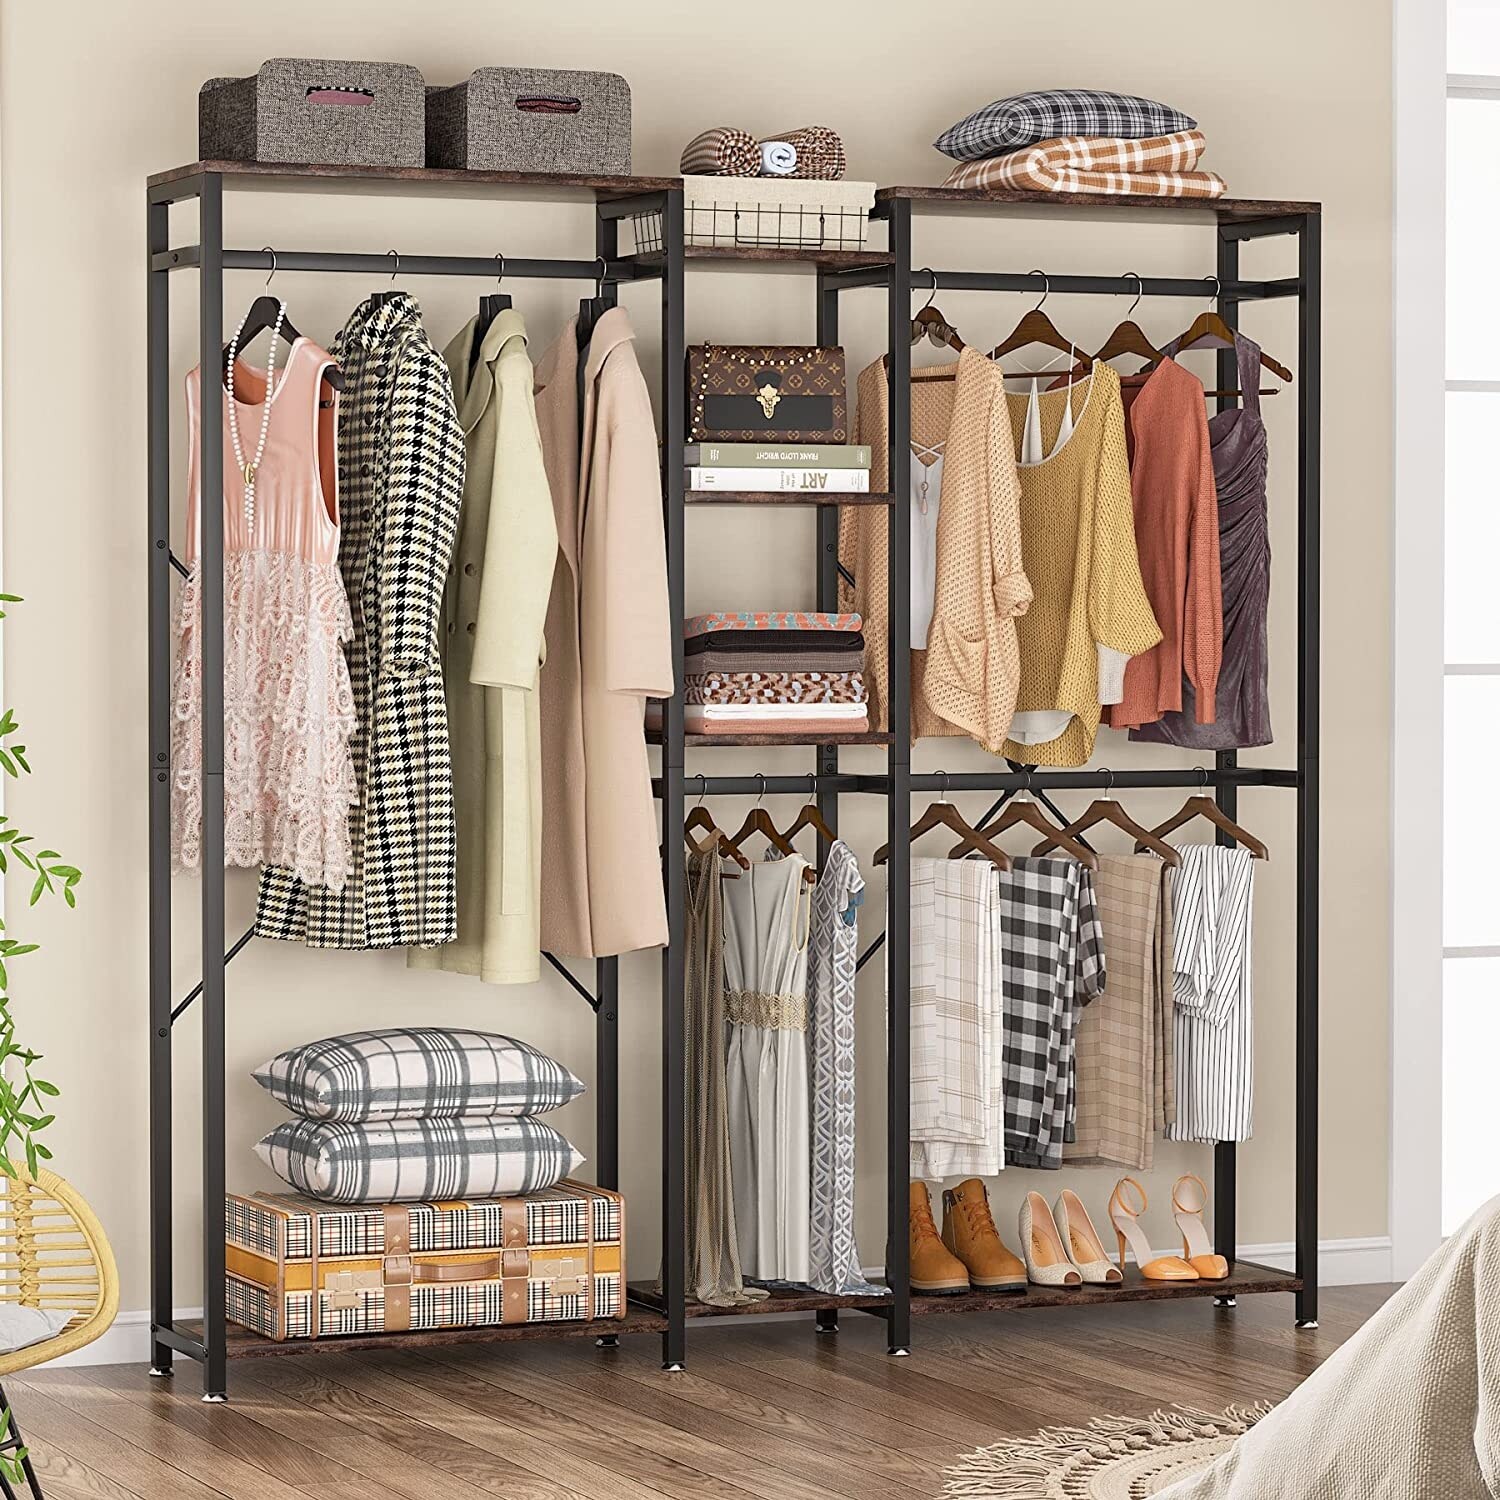 Grey 4 Tier Door Hanging Clothes Shelf 11.81 x 11.81 x 35.04 inches Organiser Bag Storage Pockets Bag Wardrobe Decor 